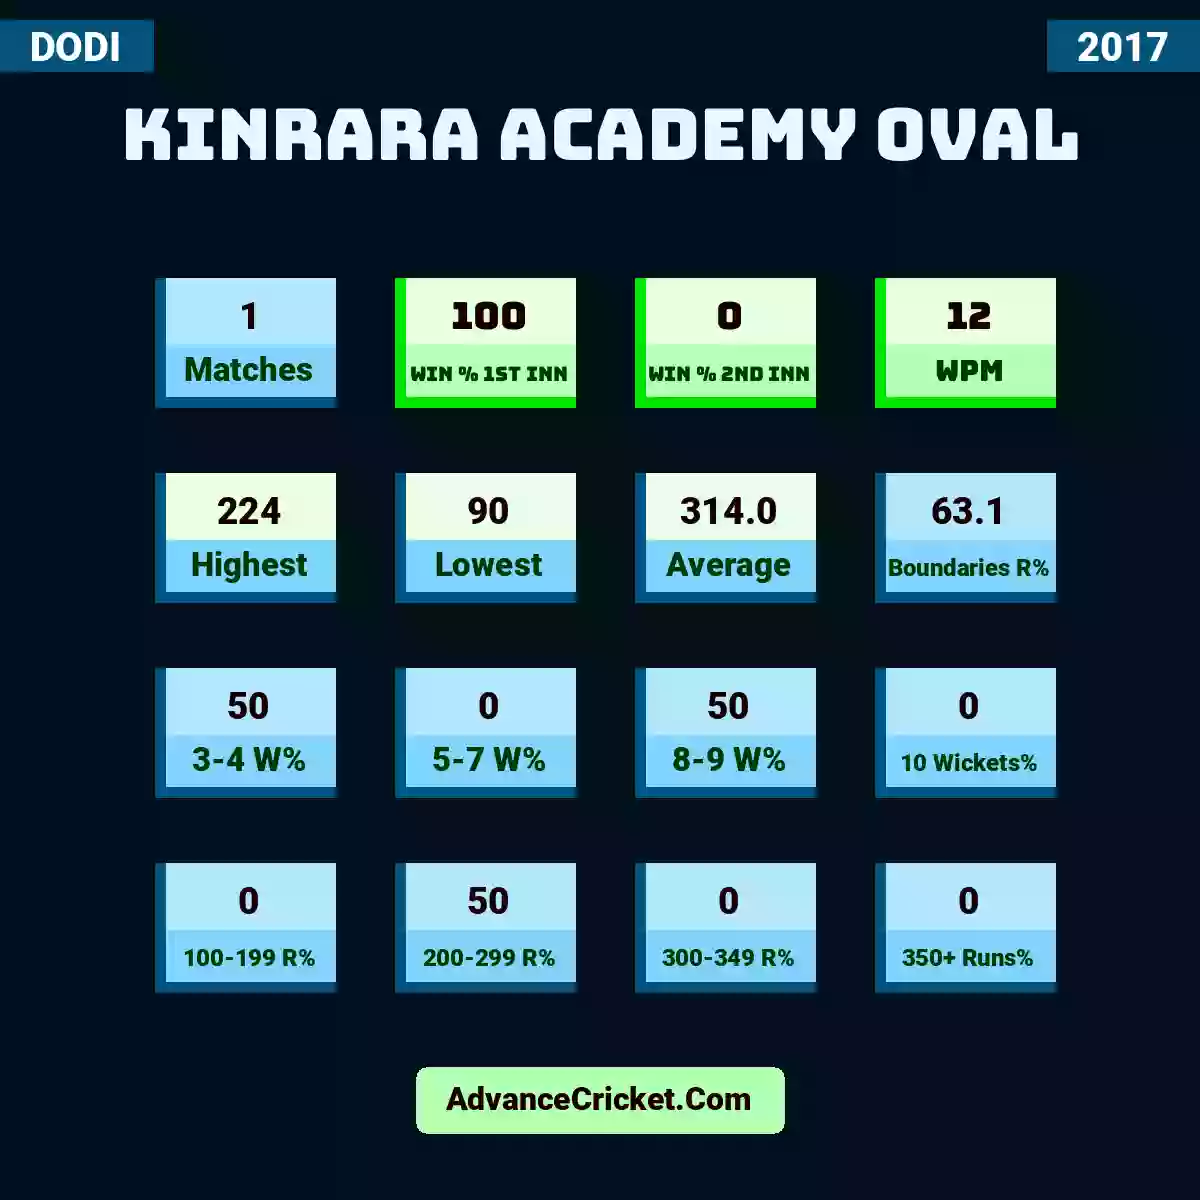 Image showing Kinrara Academy Oval with Matches: 1, Win % 1st Inn: 100, Win % 2nd Inn: 0, WPM: 12, Highest: 224, Lowest: 90, Average: 314.0, Boundaries R%: 63.1, 3-4 W%: 50, 5-7 W%: 0, 8-9 W%: 50, 10 Wickets%: 0, 100-199 R%: 0, 200-299 R%: 50, 300-349 R%: 0, 350+ Runs%: 0.